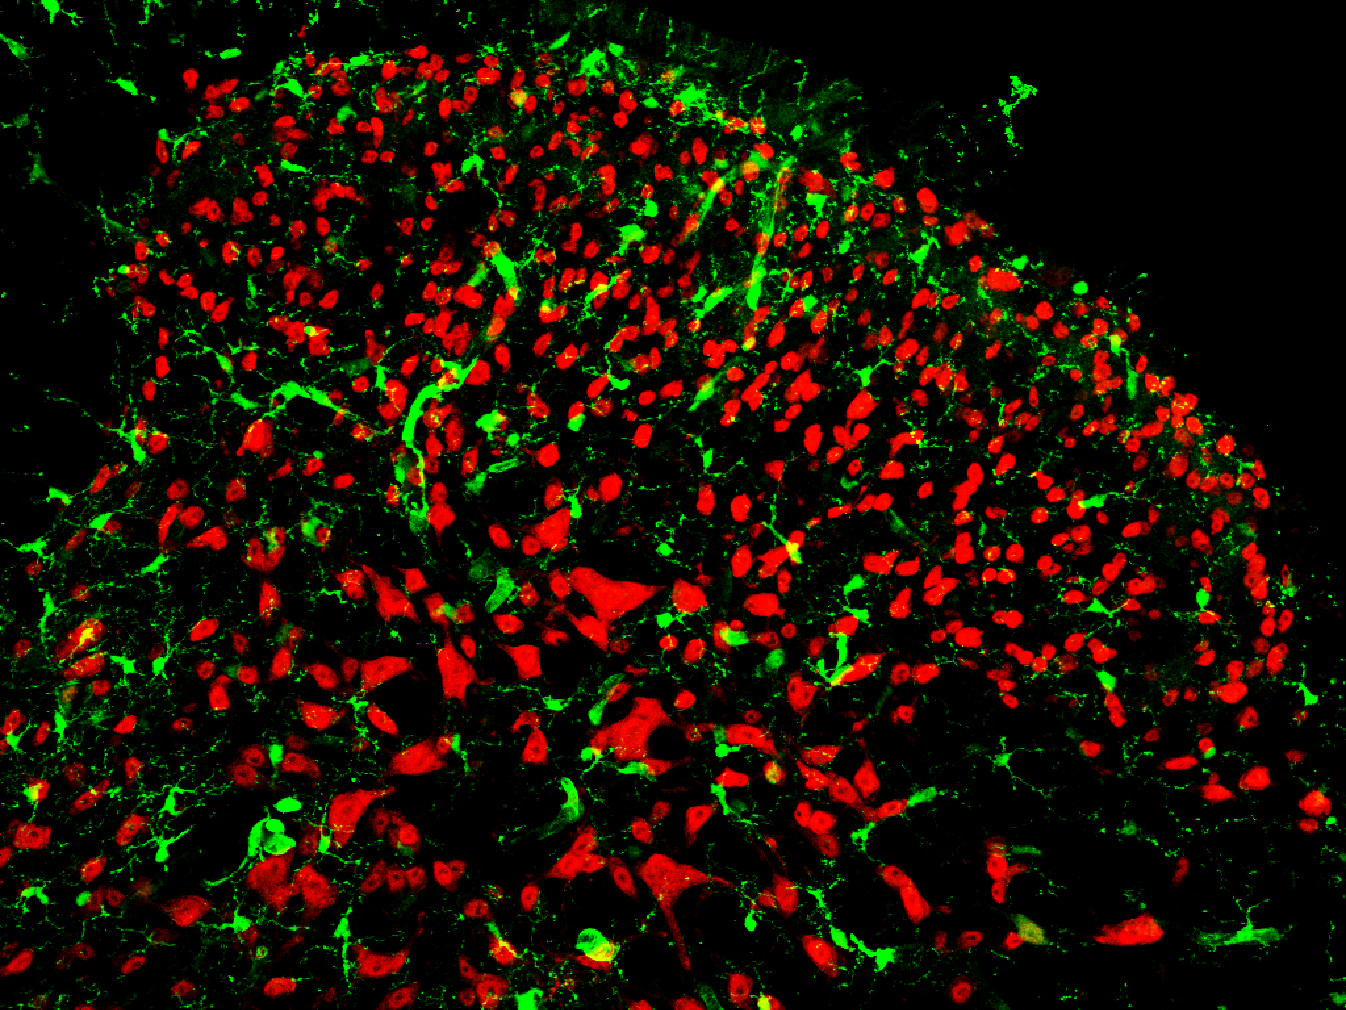 Thumbnail of Spinal microglia and neurons